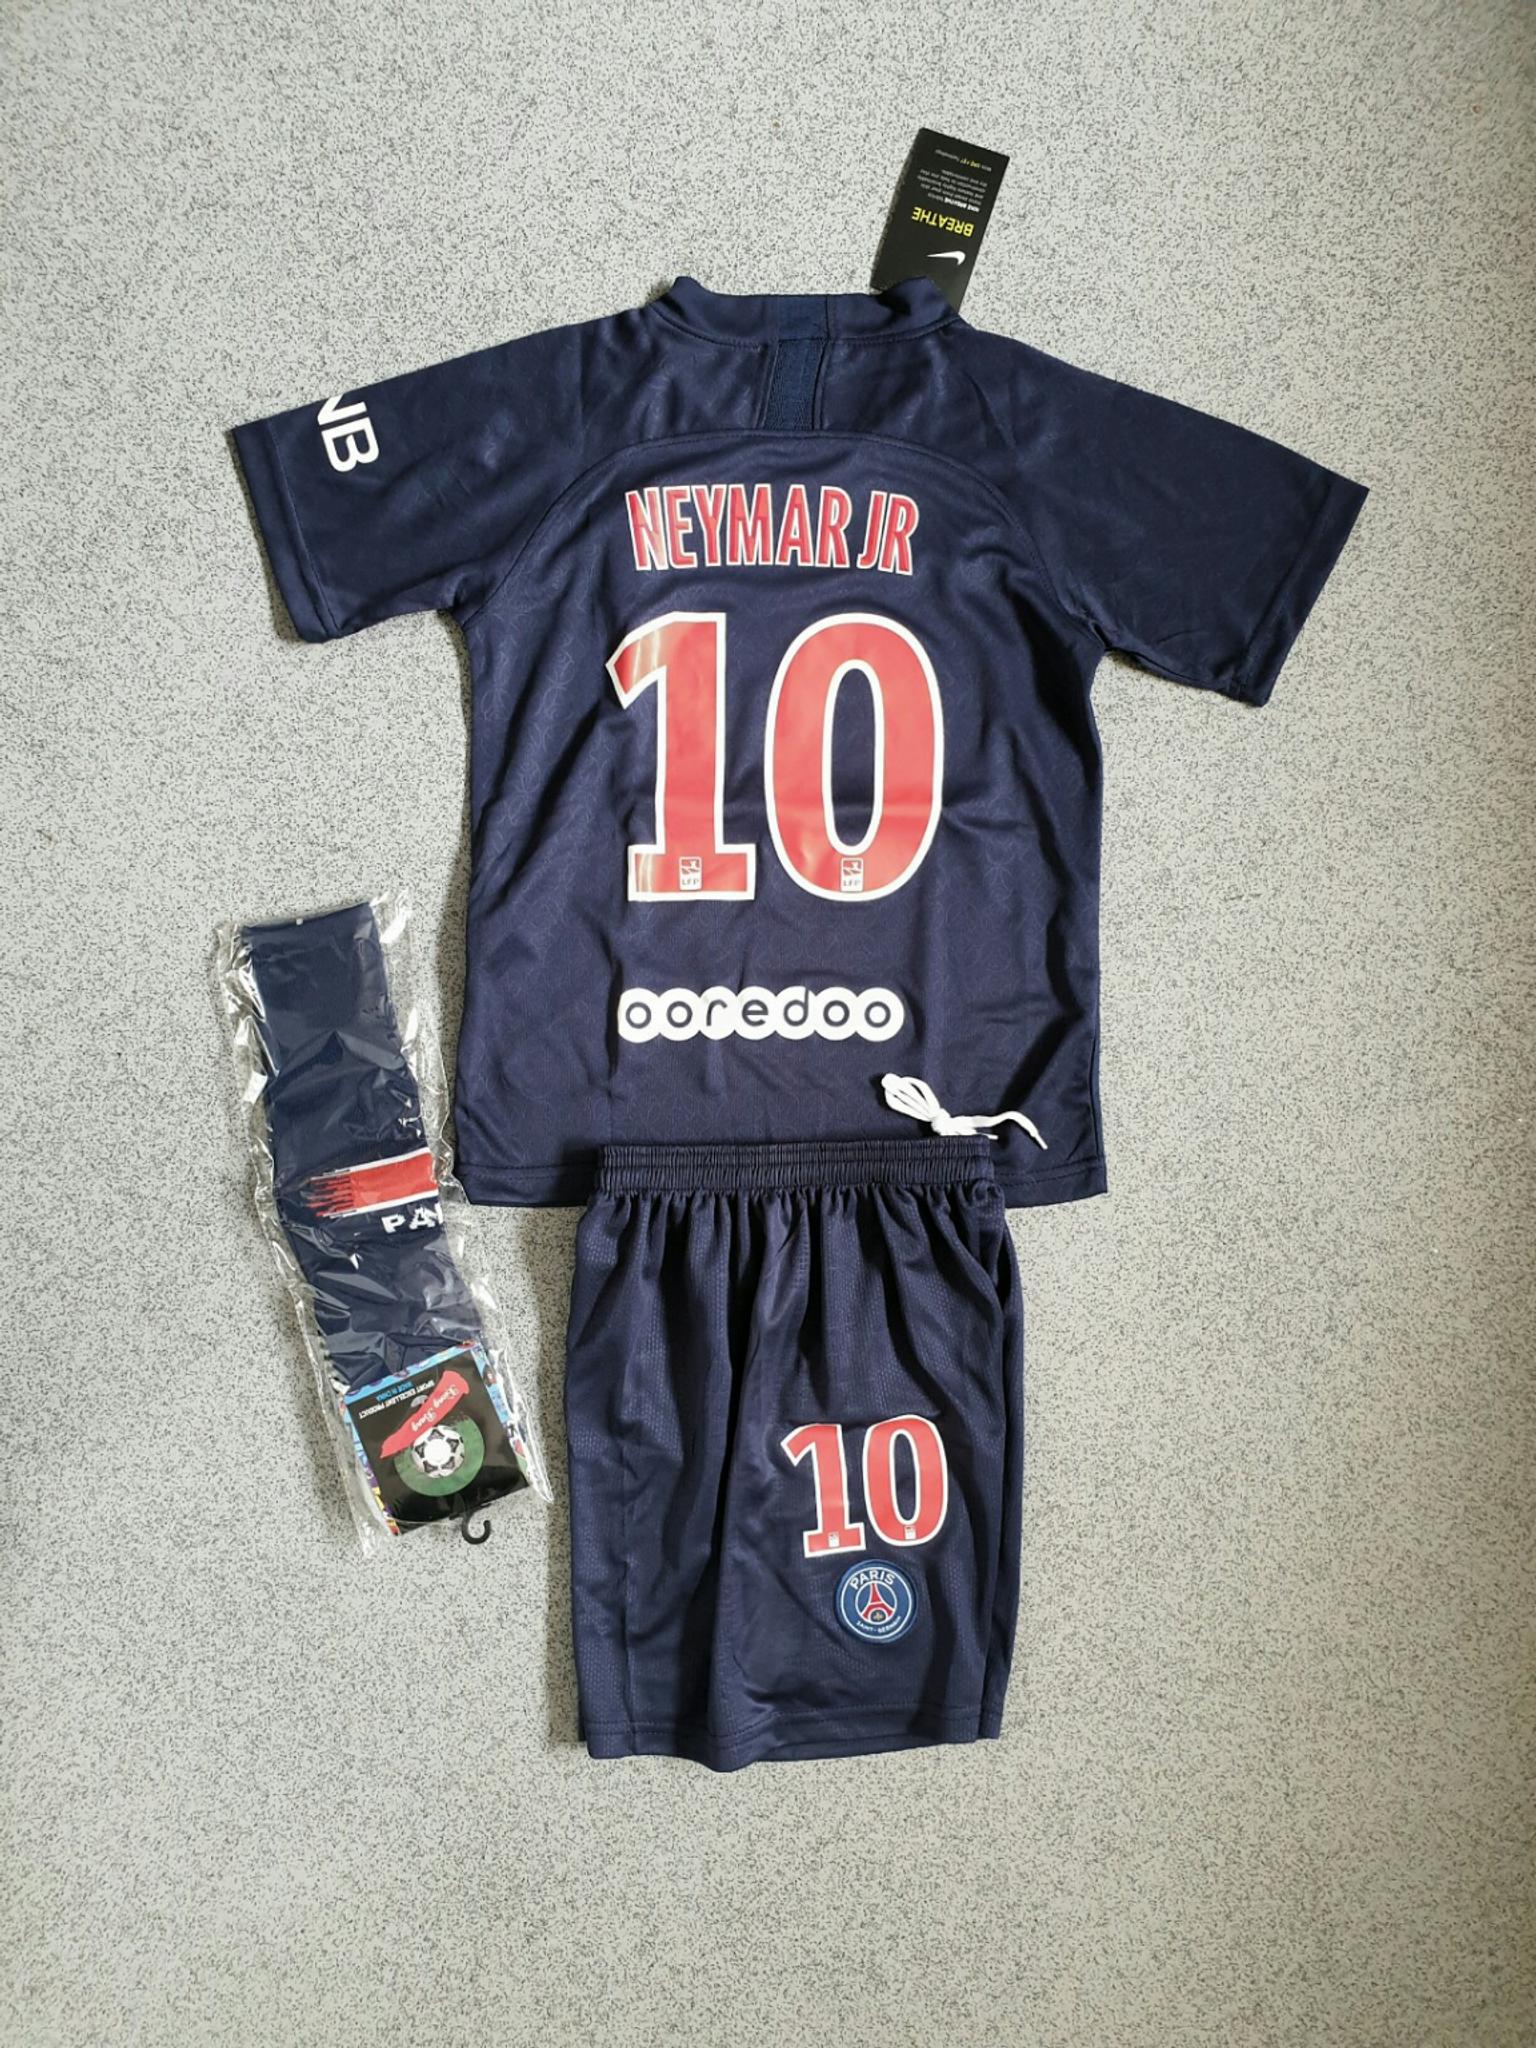 neymar jr football kit